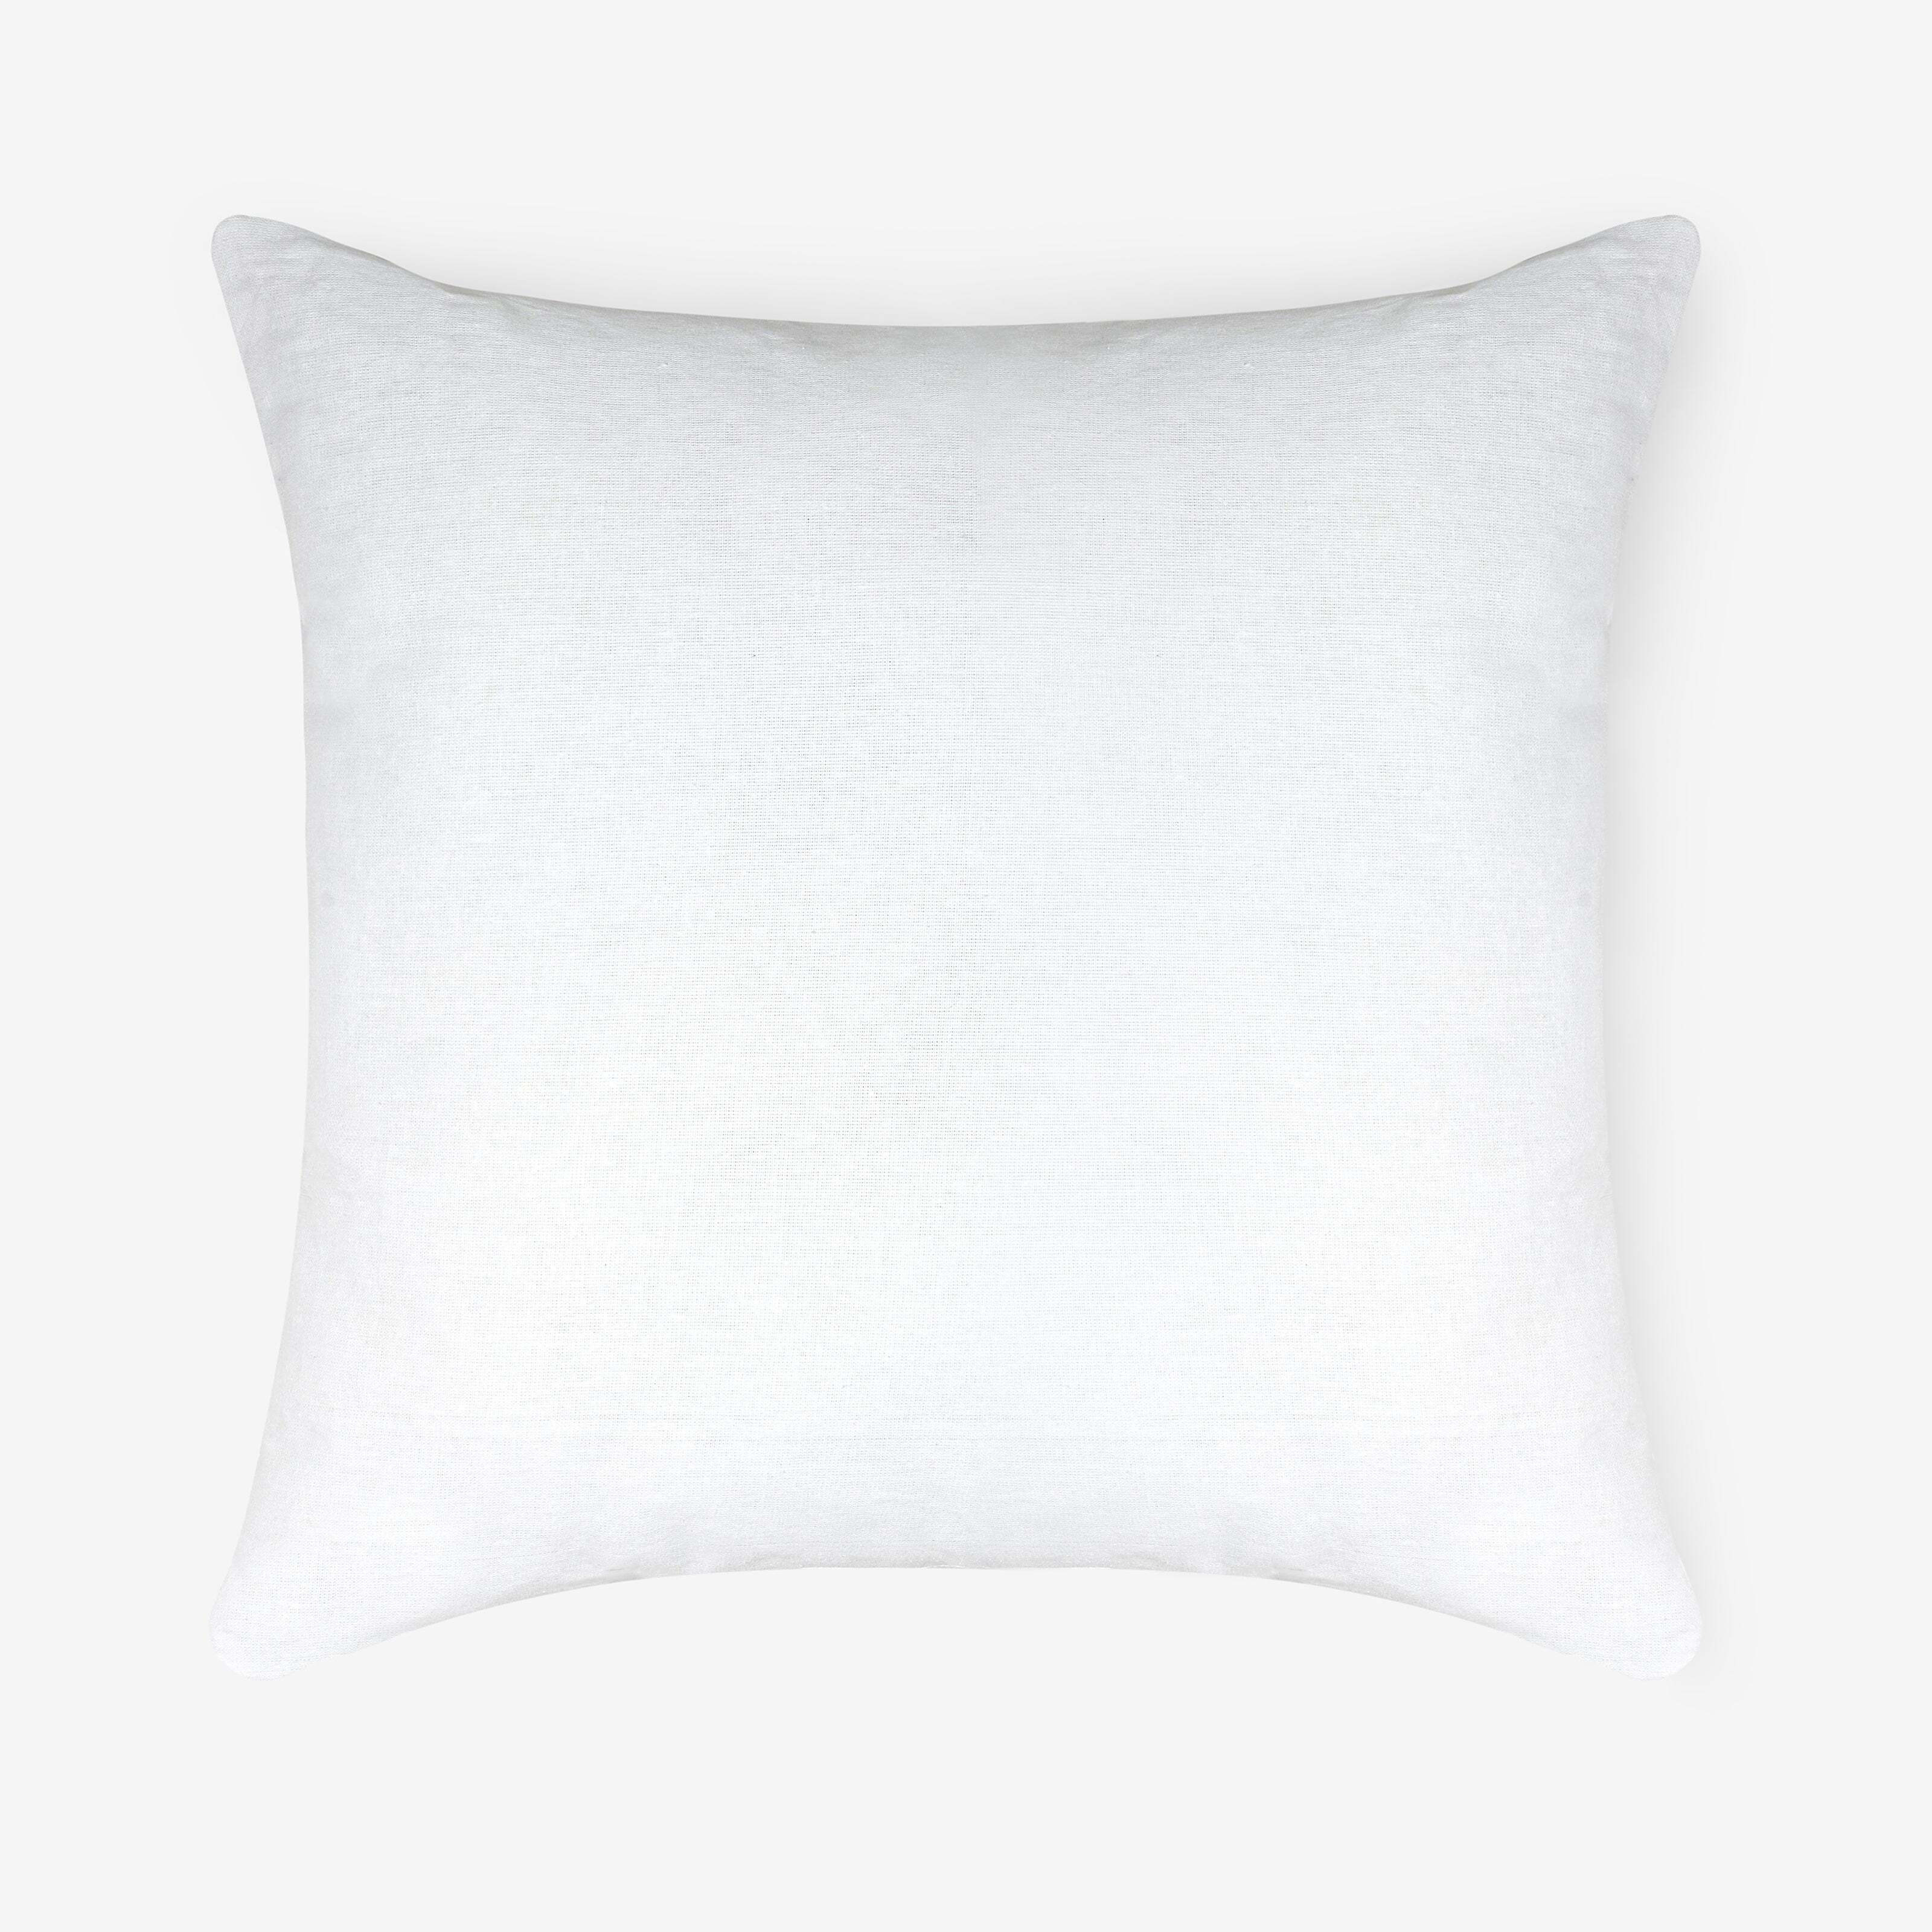 Small Square Cotton Cushion Pad, White, 40x40 cm